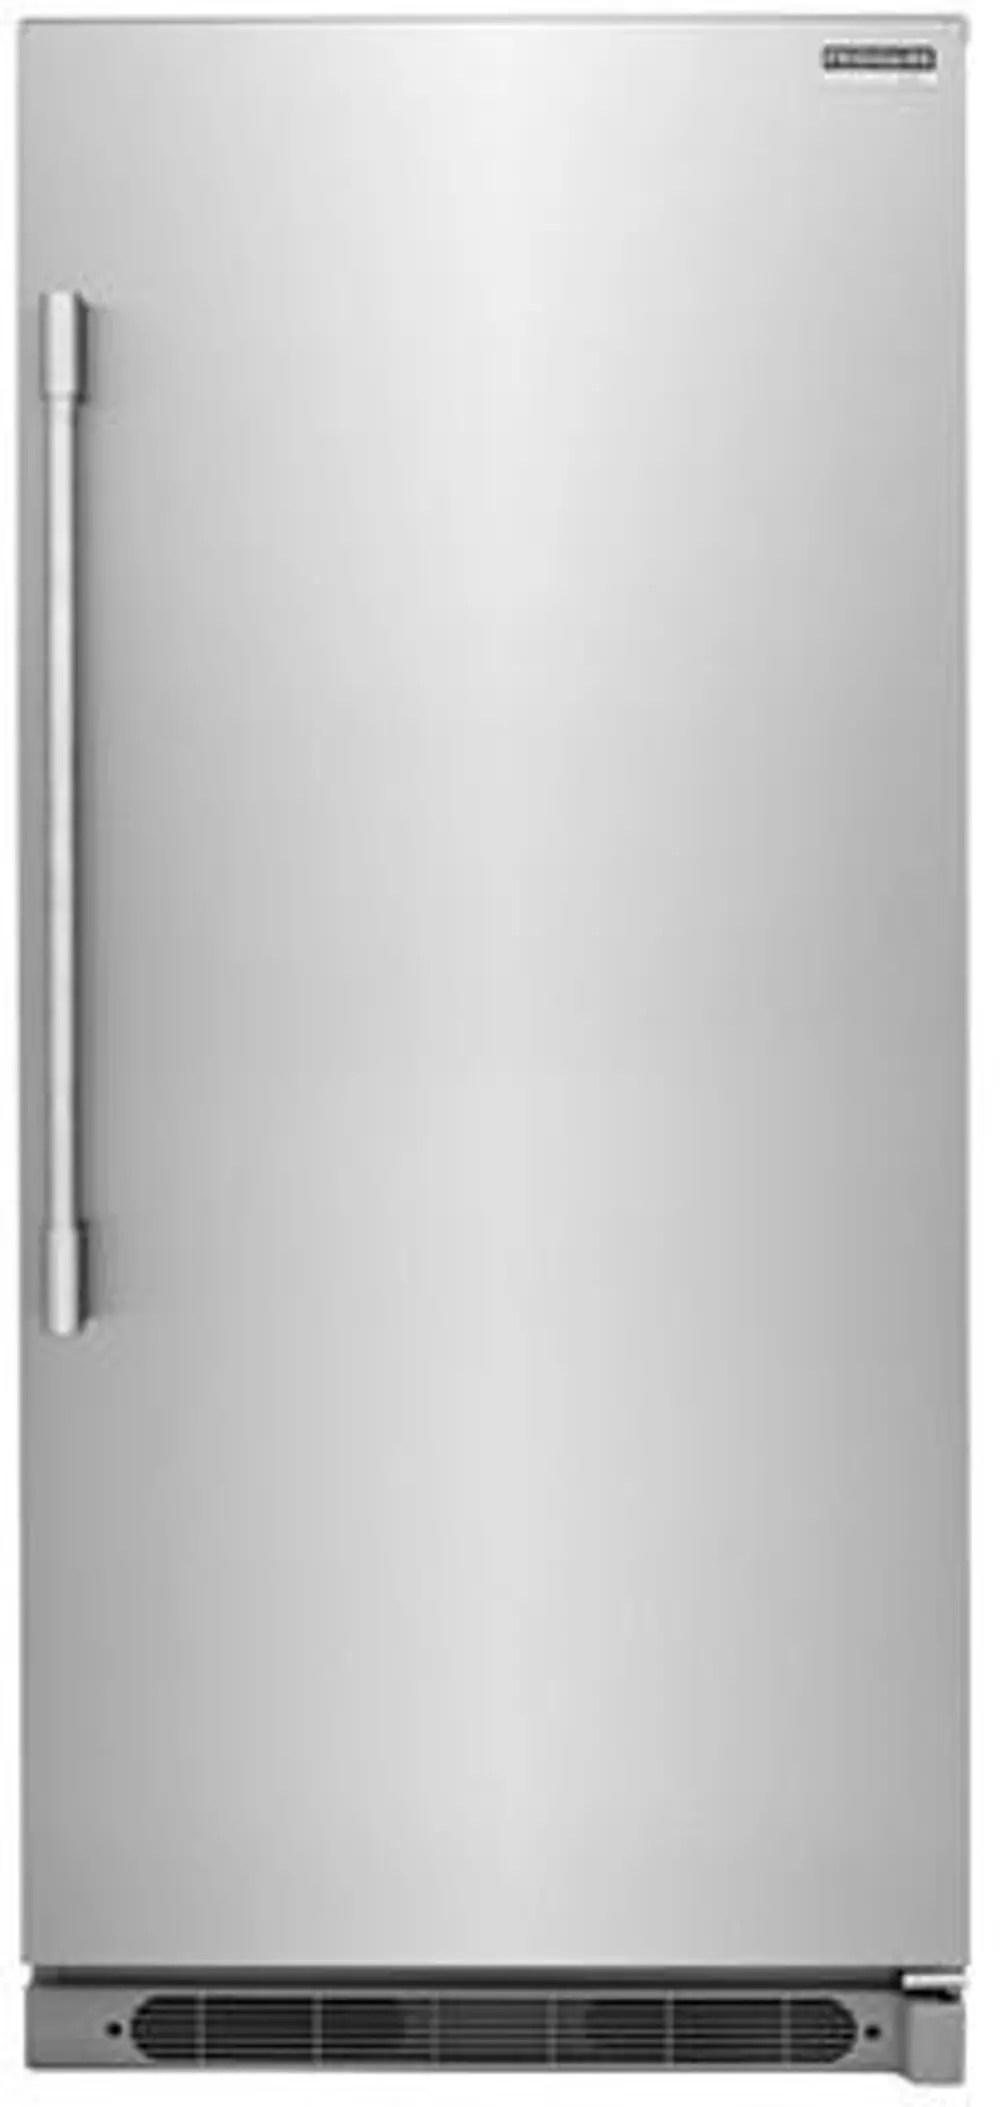 FPRU19F8RF Frigidaire All Refrigerator - 32 Inch Stainless Steel-1